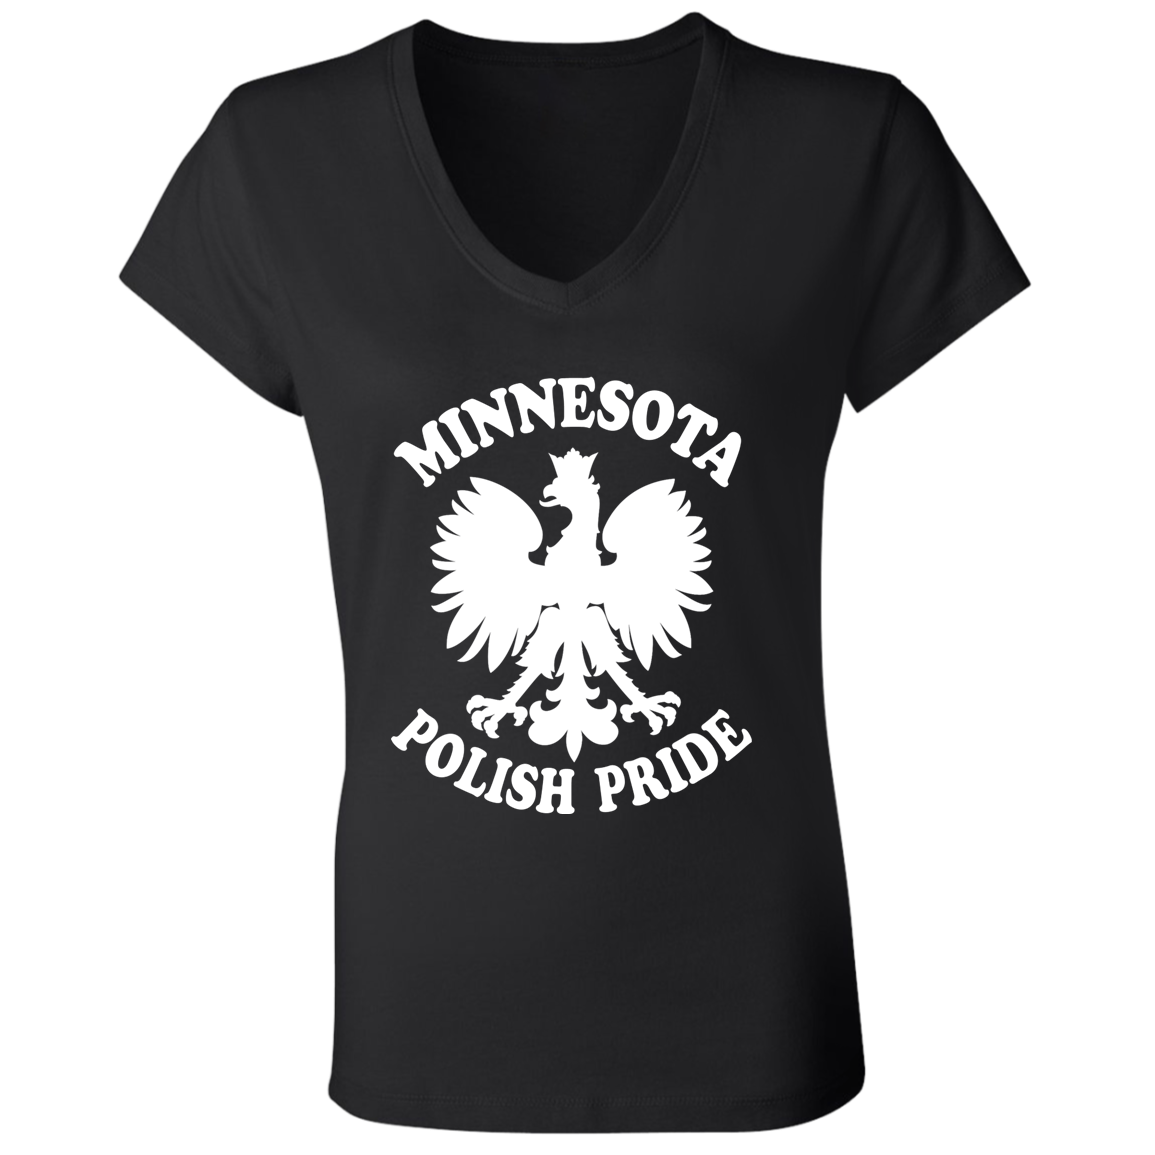 Minnesota Polish Pride Apparel CustomCat B6005 Ladies' Jersey V-Neck T-Shirt Black S